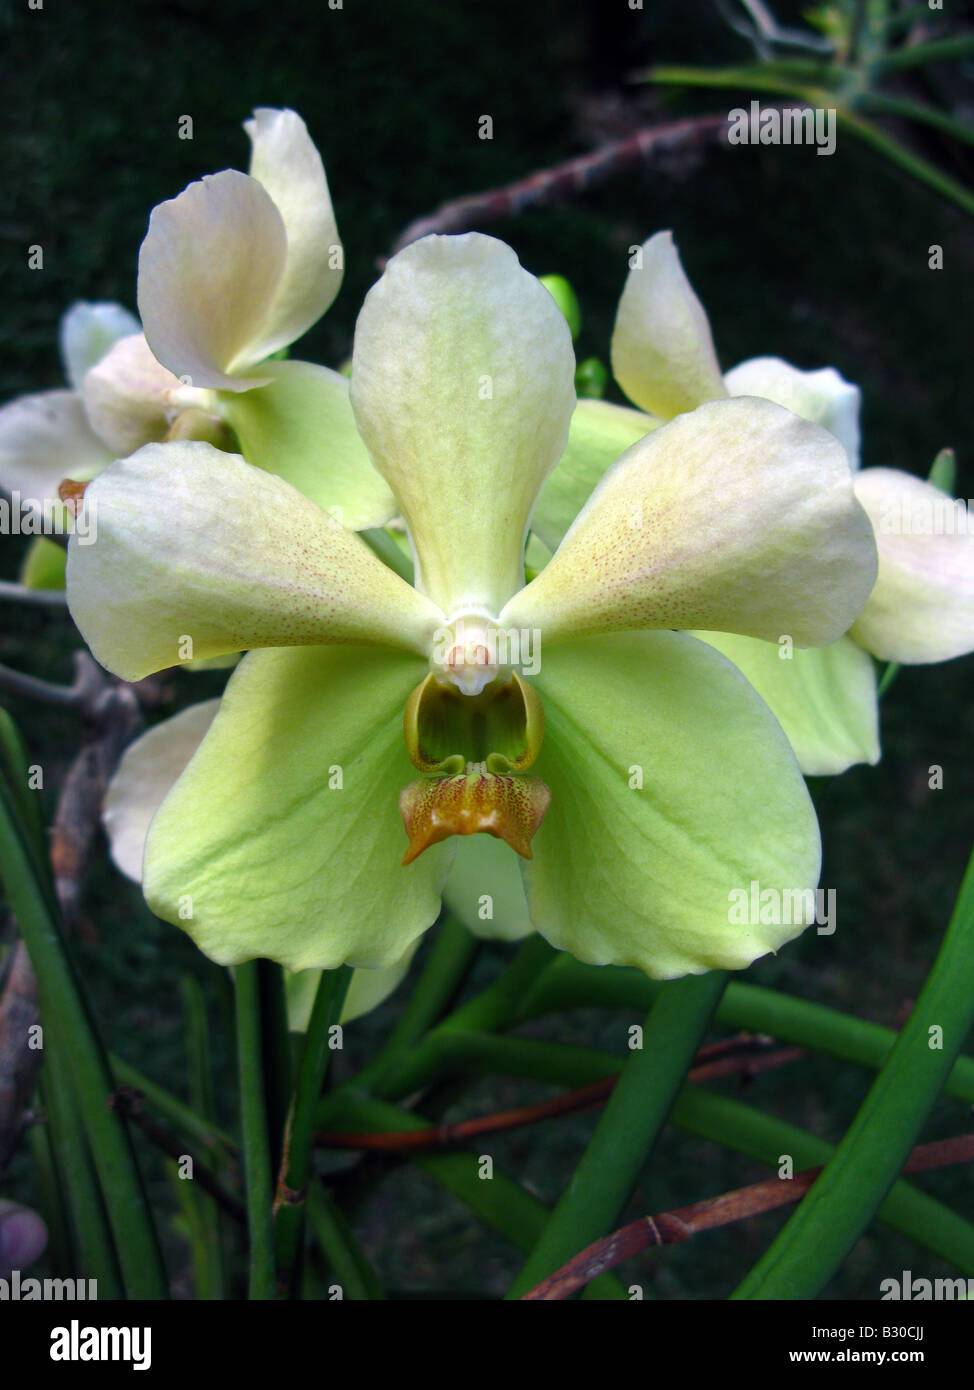 Vanda orchid close up Stock Photo